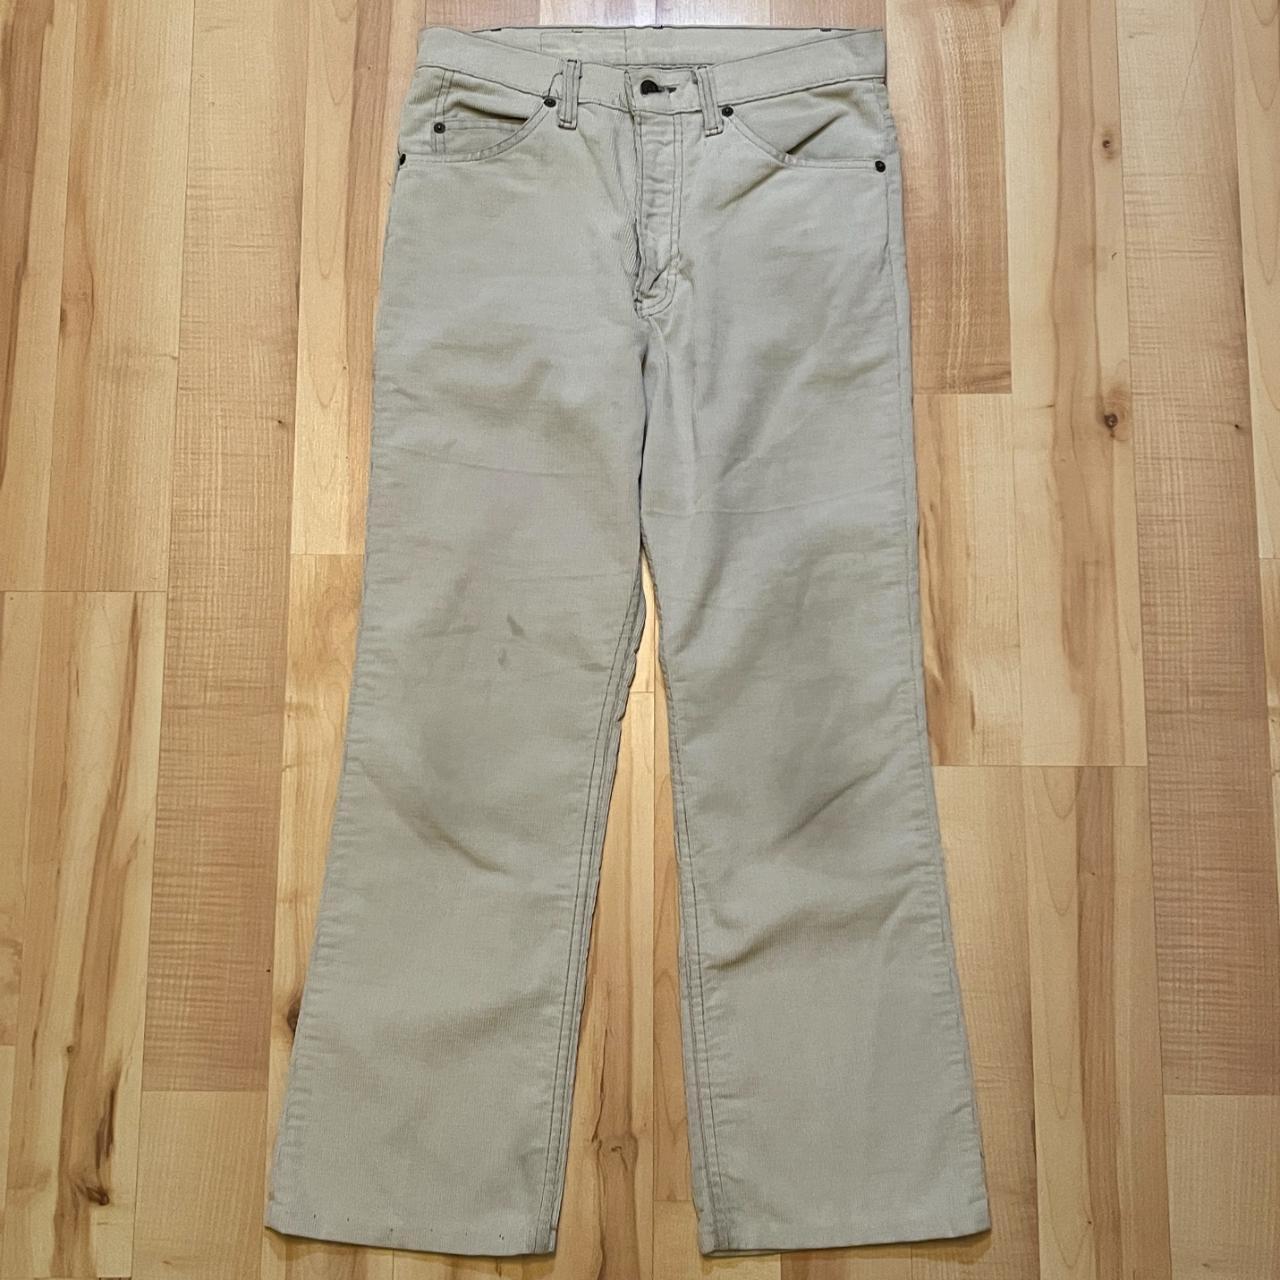 Vintage 70s corduroy pants. In excellent condition, - Depop